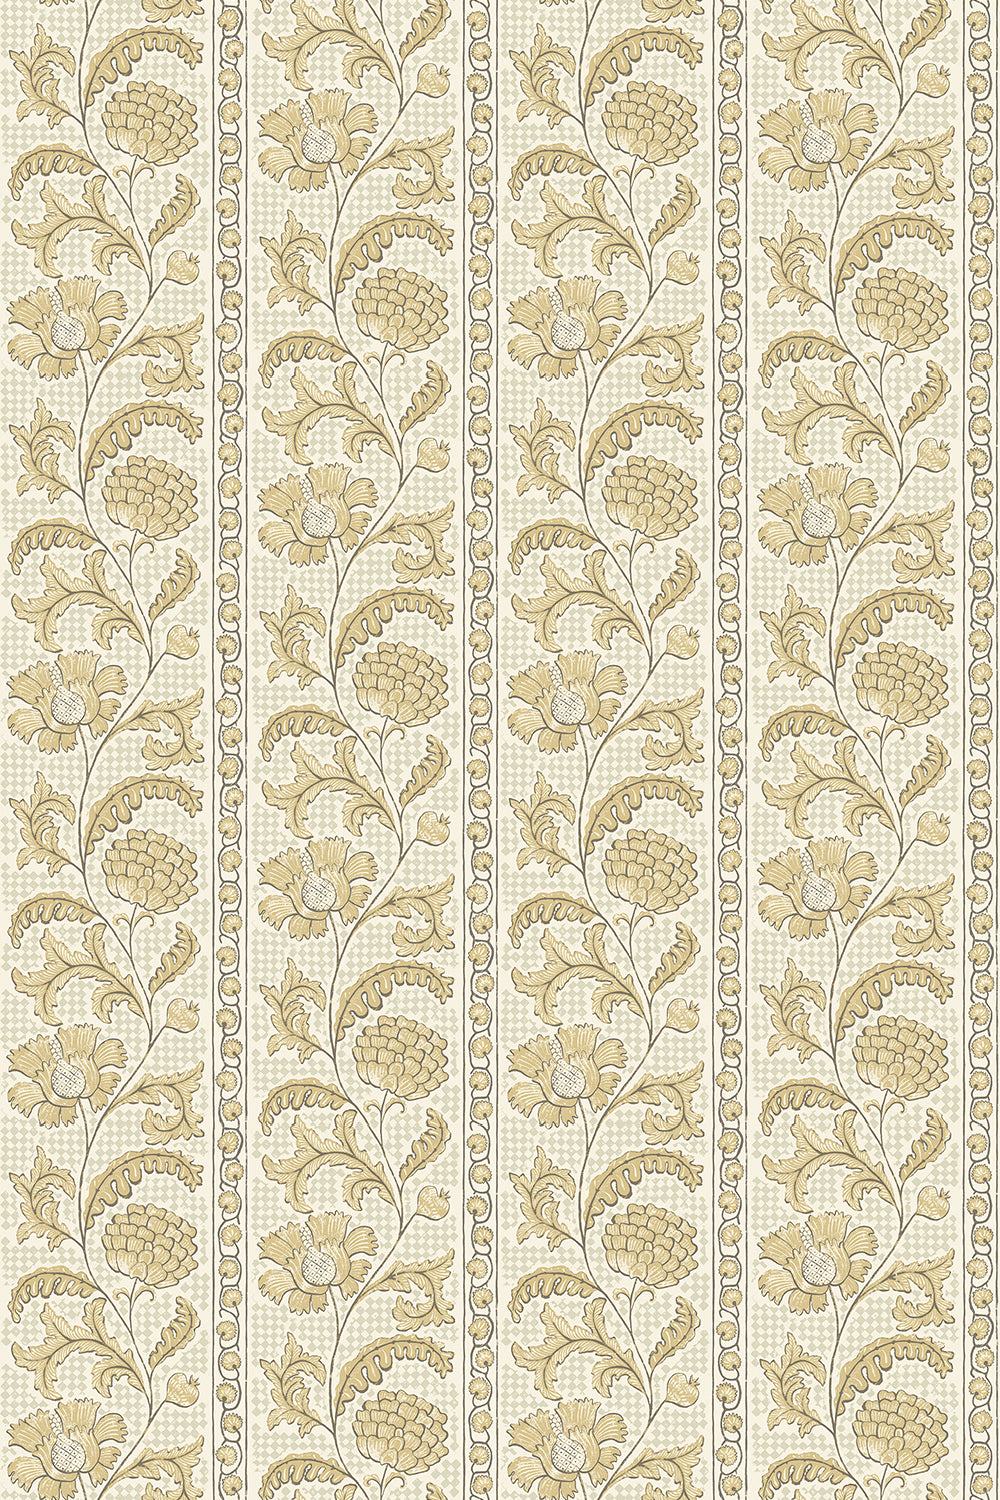 Josephine-Munsey-Floral-Check-Wallpaper-Lemon-and-Salt-Ridge-Floral-trailing-stripes-checkered-background-traditional-print-illustrated-pattern-British-Designer